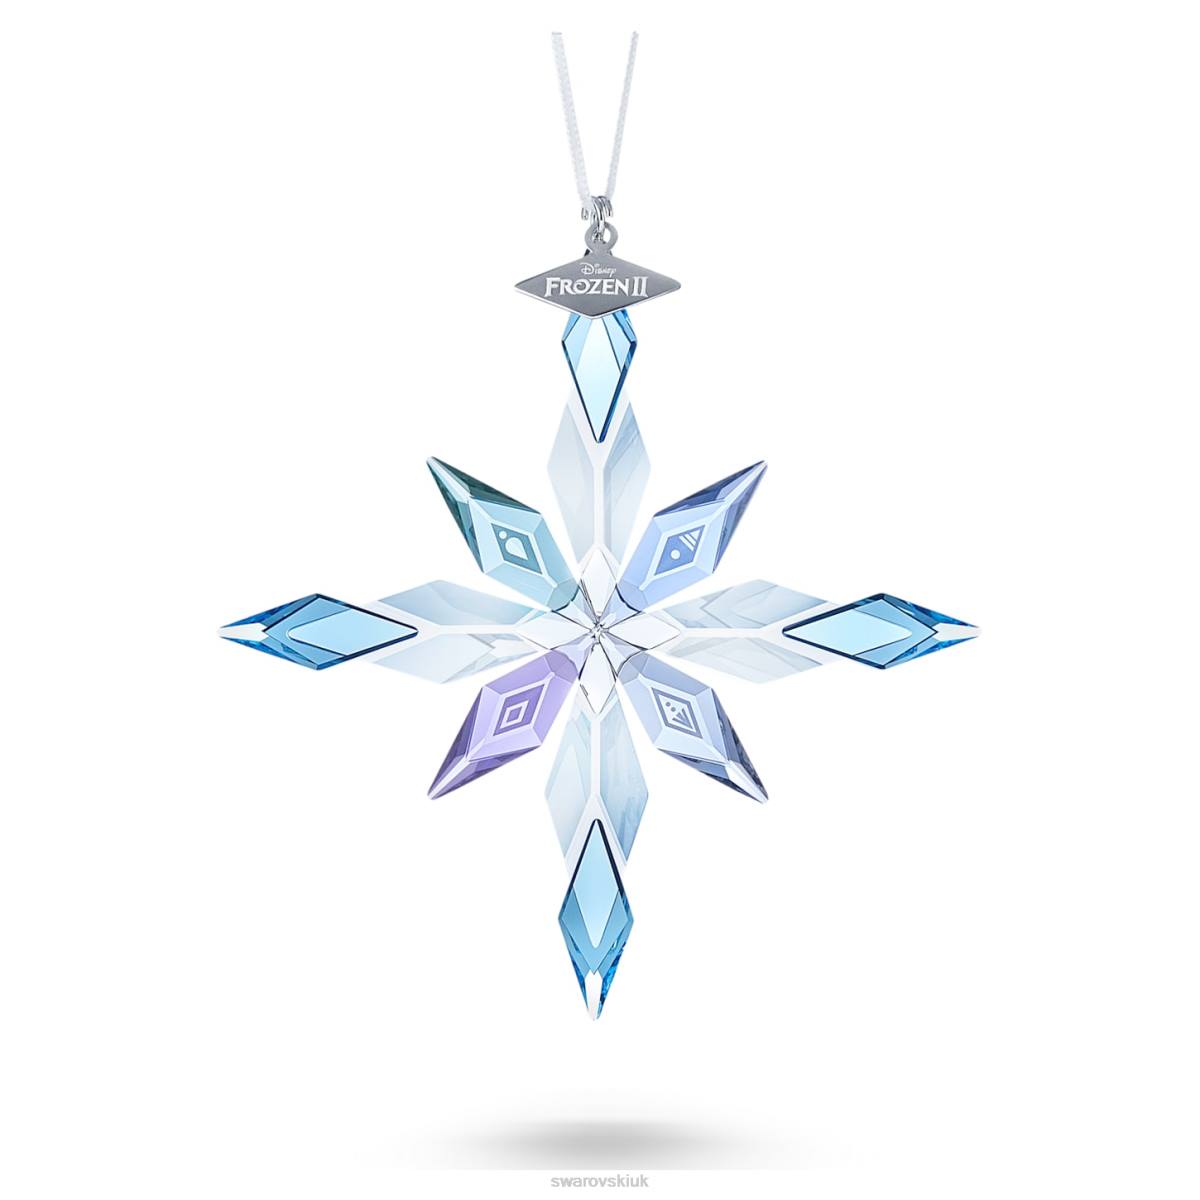 Decorations Swarovski Frozen 2 Snowflake Ornament Collection 48JX1546